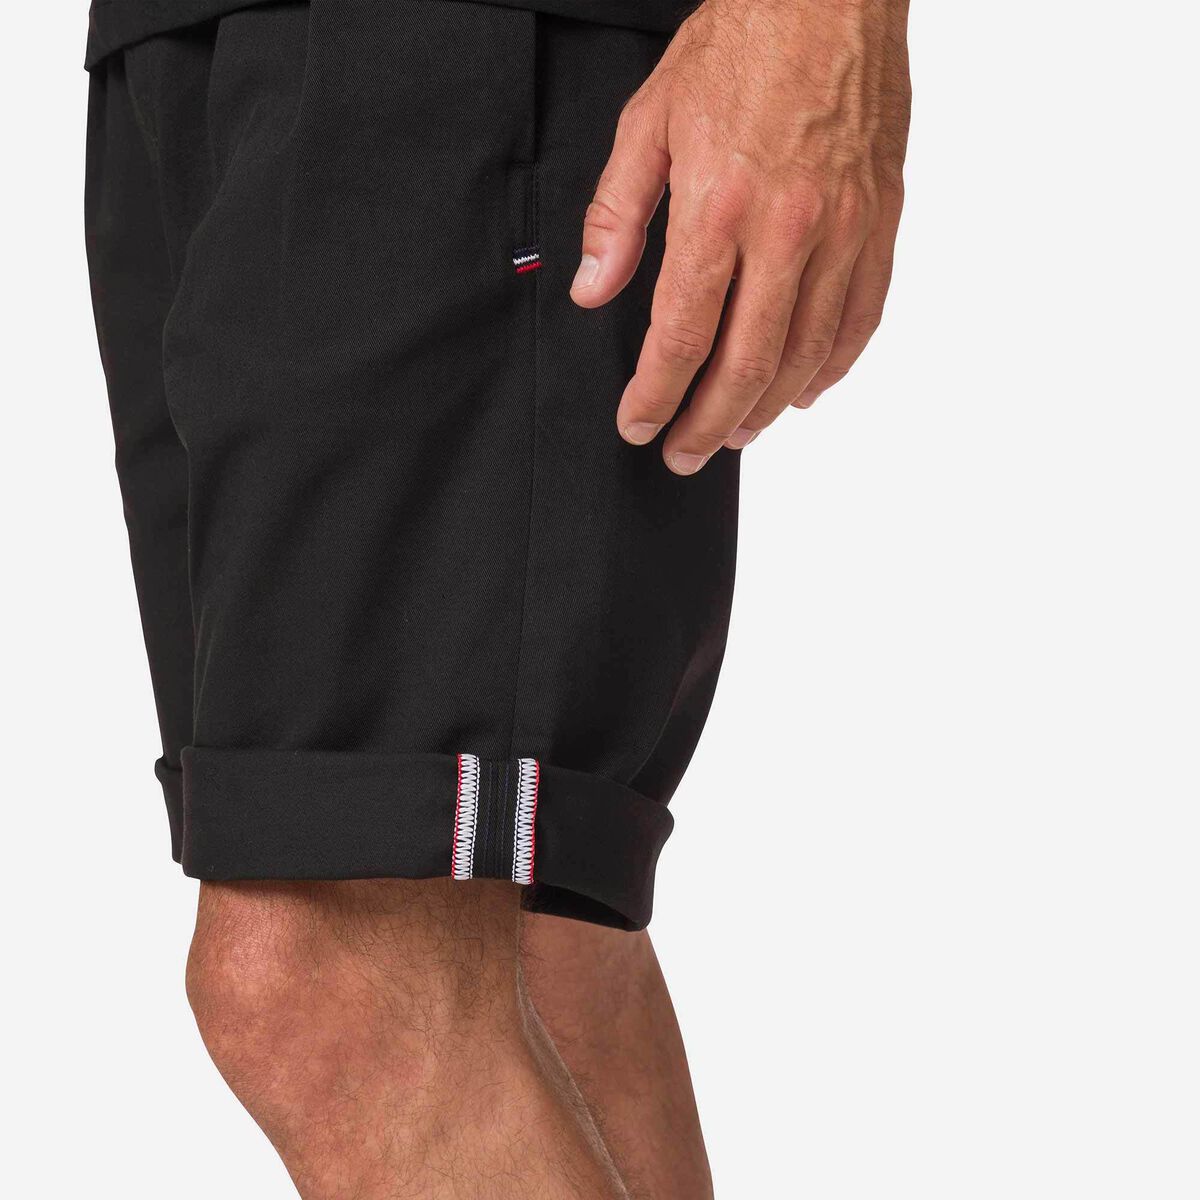 Men's organic cotton chino shorts